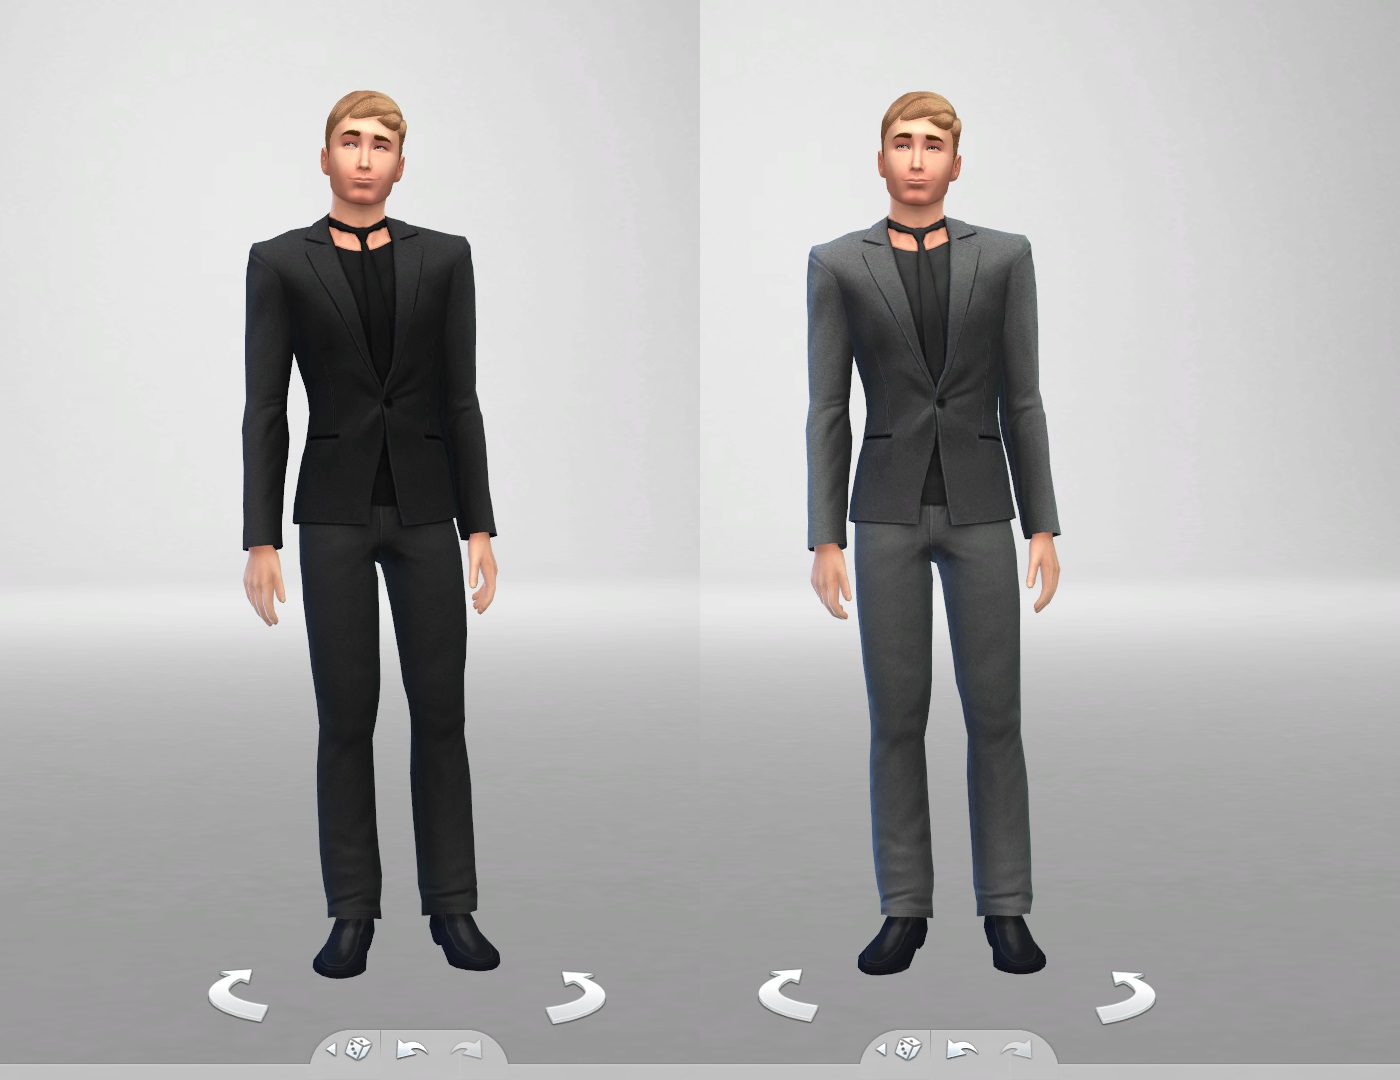 Мужчины 4 по 10. SIMS 4 Black Suit. SIMS 4 Suit Mini. Мужской костюм симс 4. Симс черный мужской костюм.